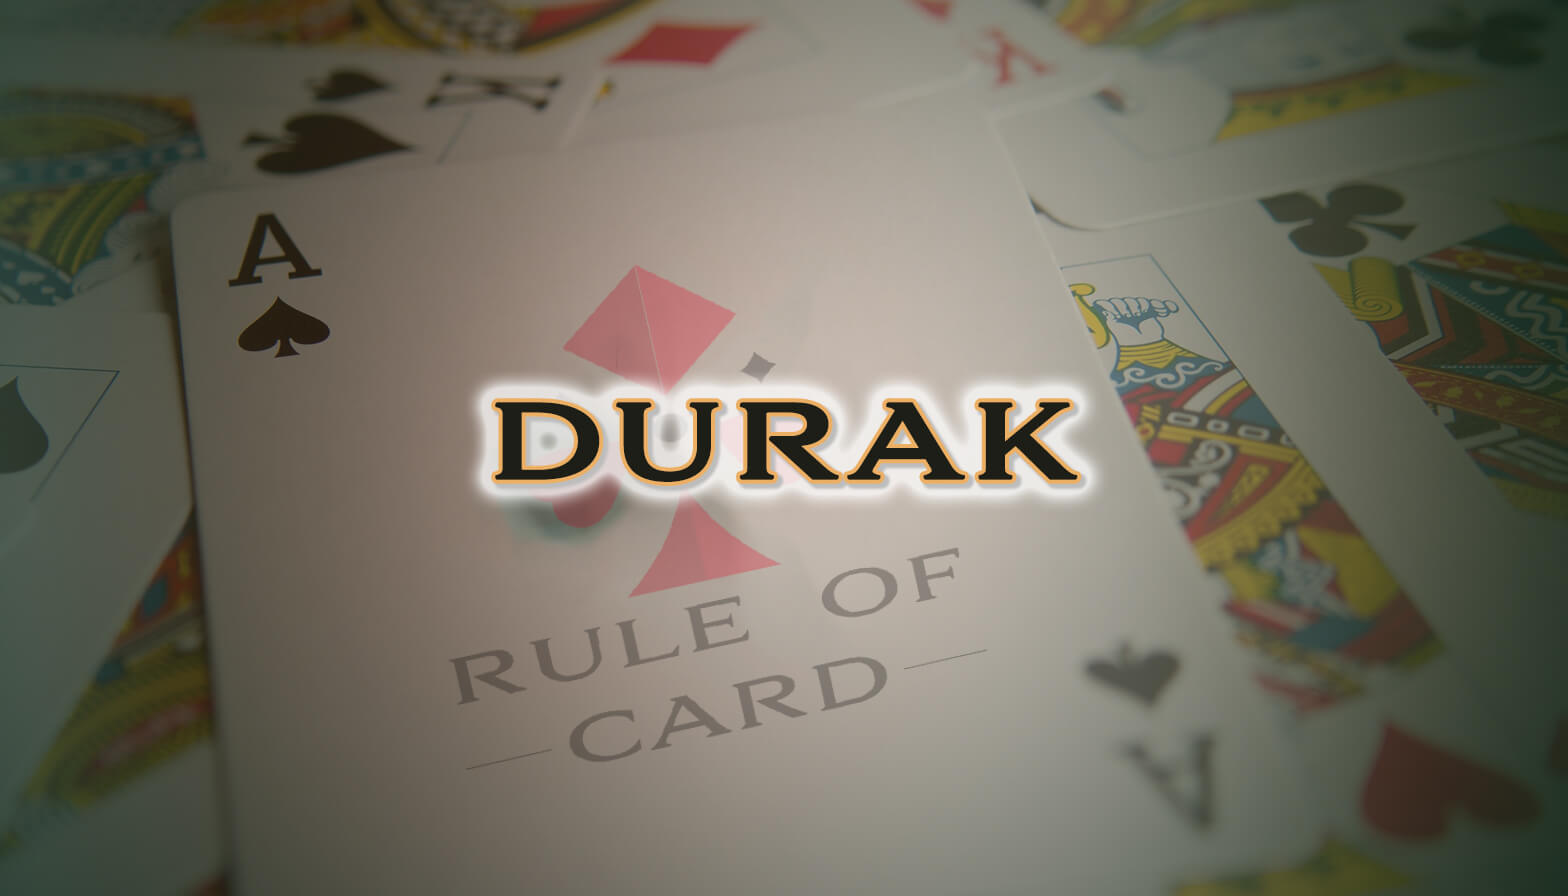 Playing the card game Durak